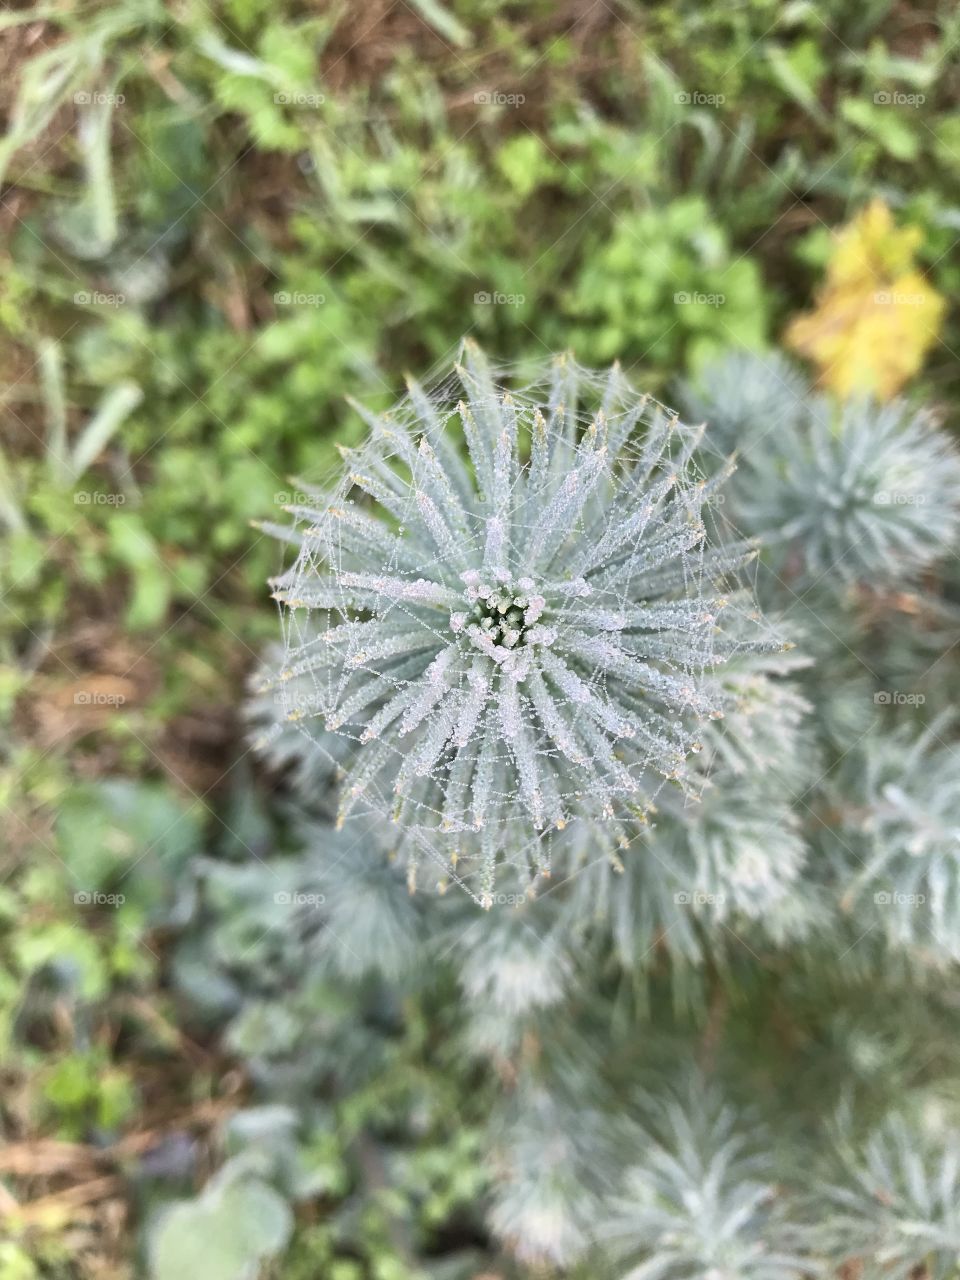 Spider web on pine needles, nature’s geometry 